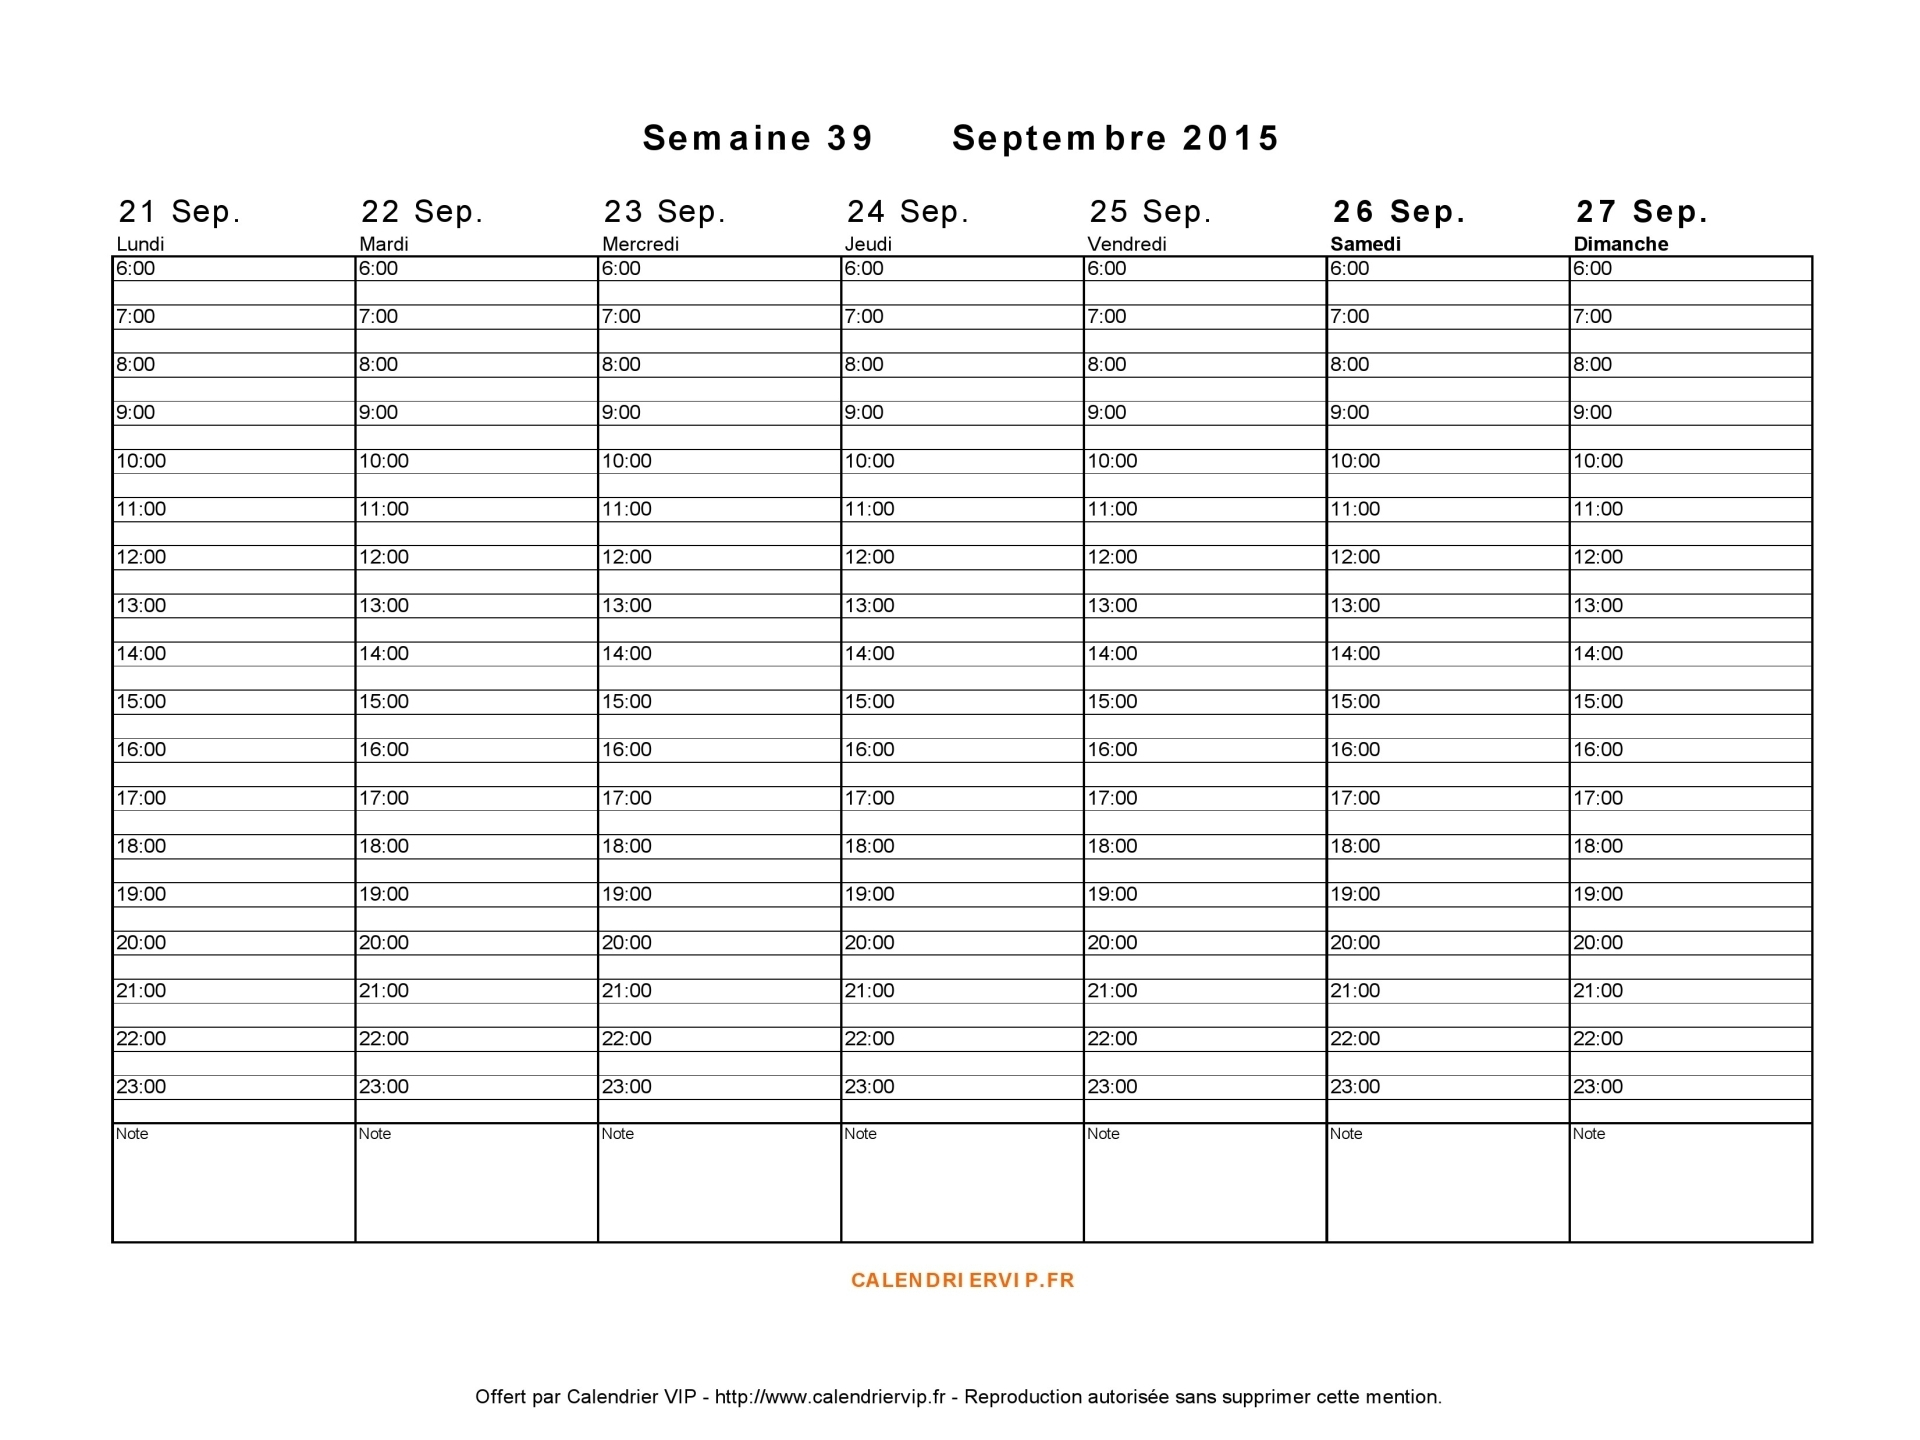 2013 Julian Date Calendar Quadax | Calendar Blank For May 2015 with regard to Calendario Juliano 2020 Quadax